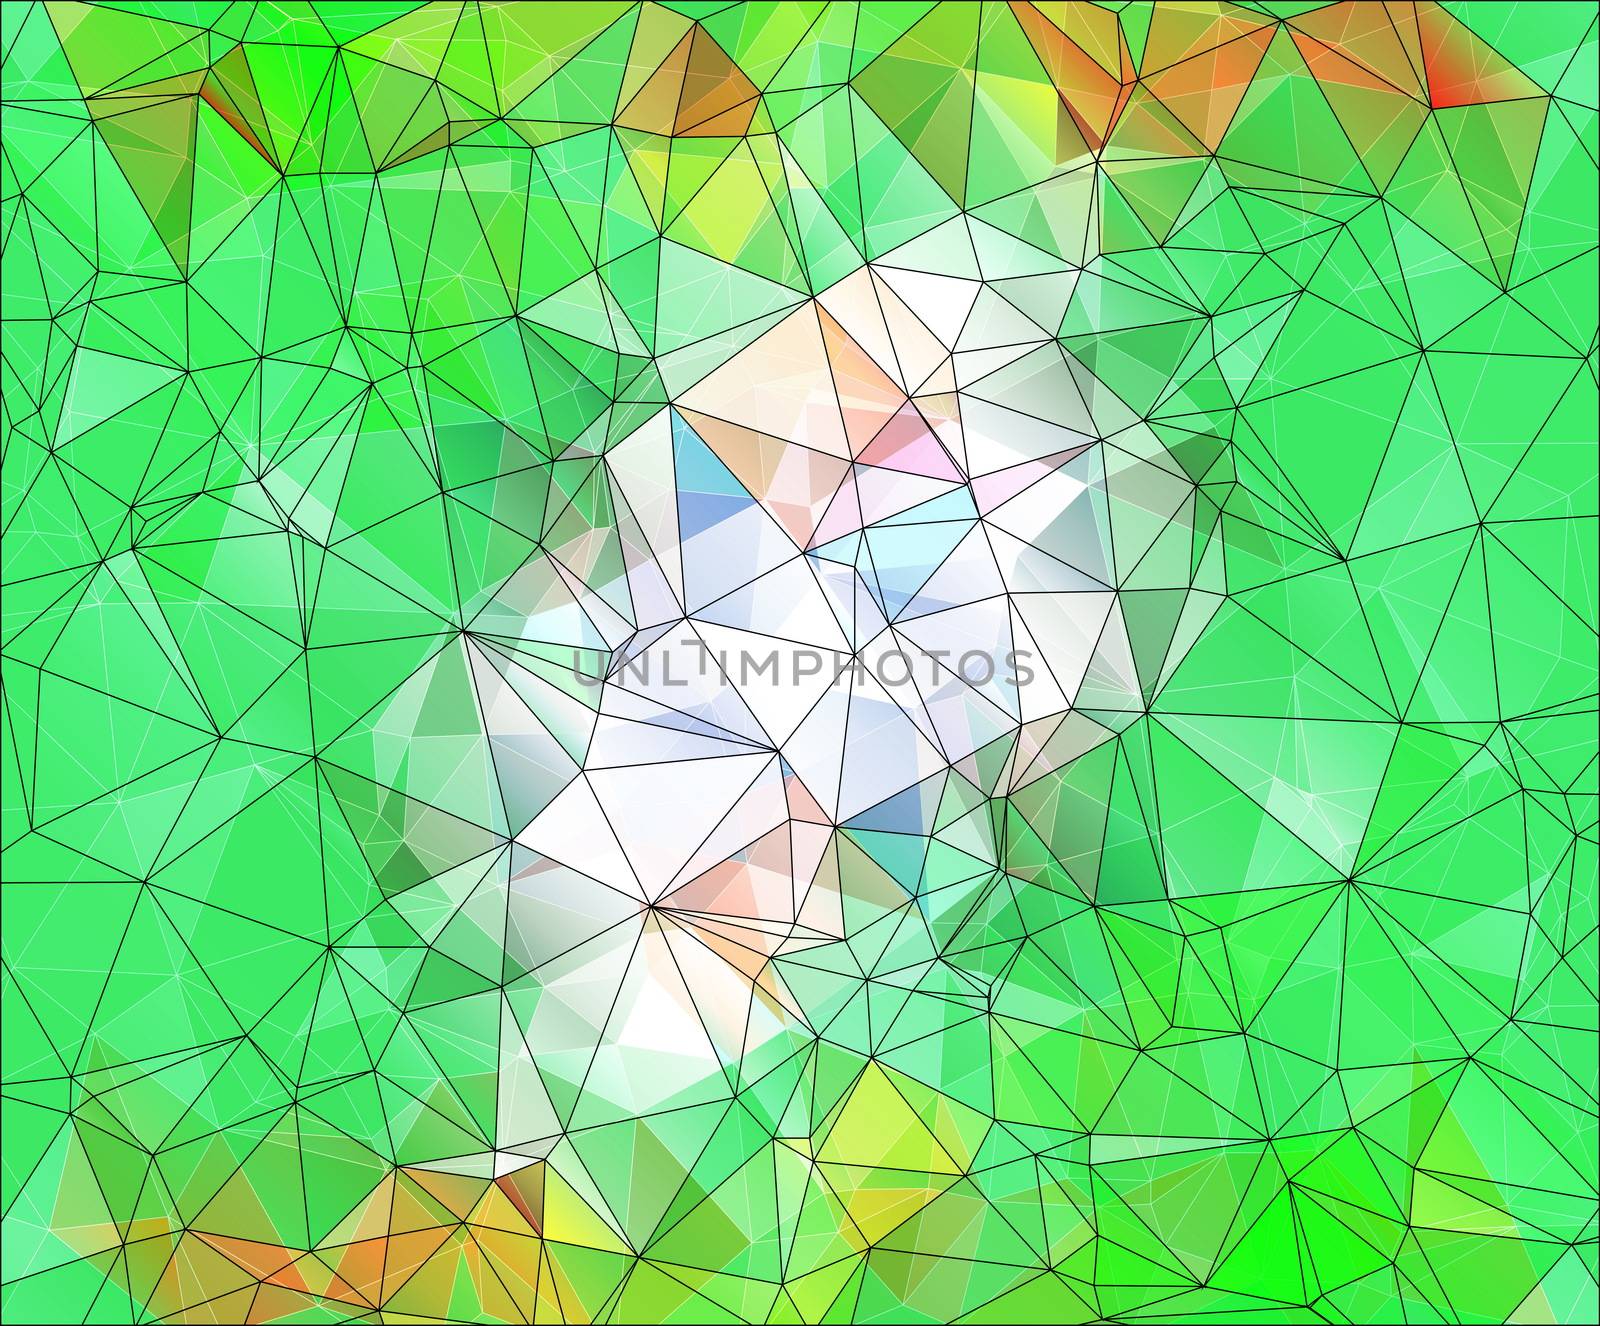 Colorful Polygonal Mosaic Background by dolfinvik